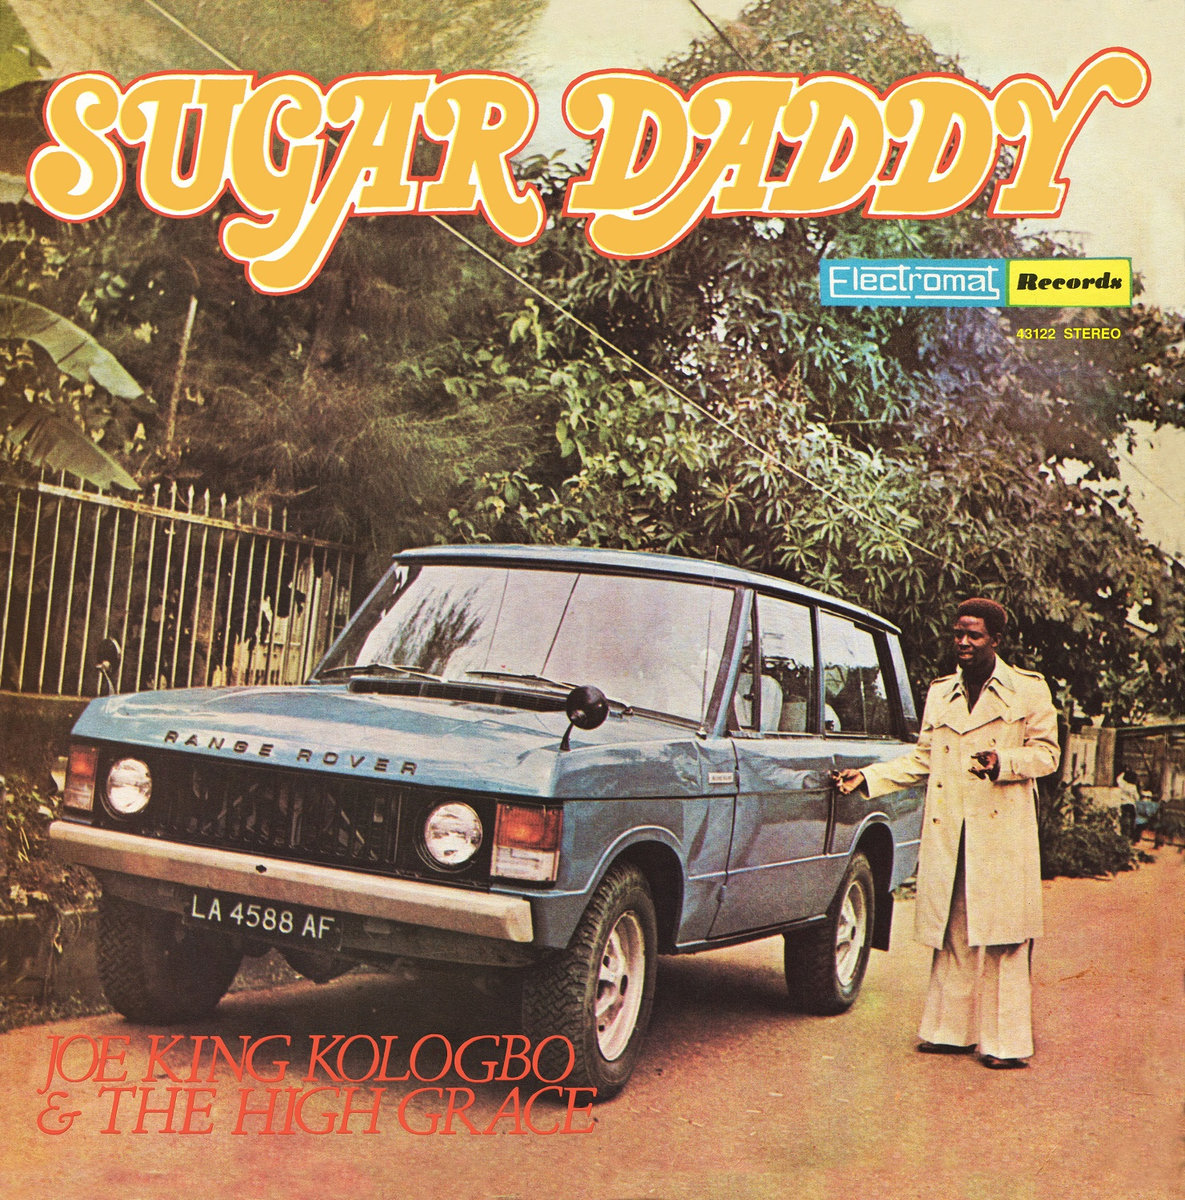 Забытая хайлайф классика начала 80-х Joe King Kologbo "Sugar Daddy" получила виниловое переиздание